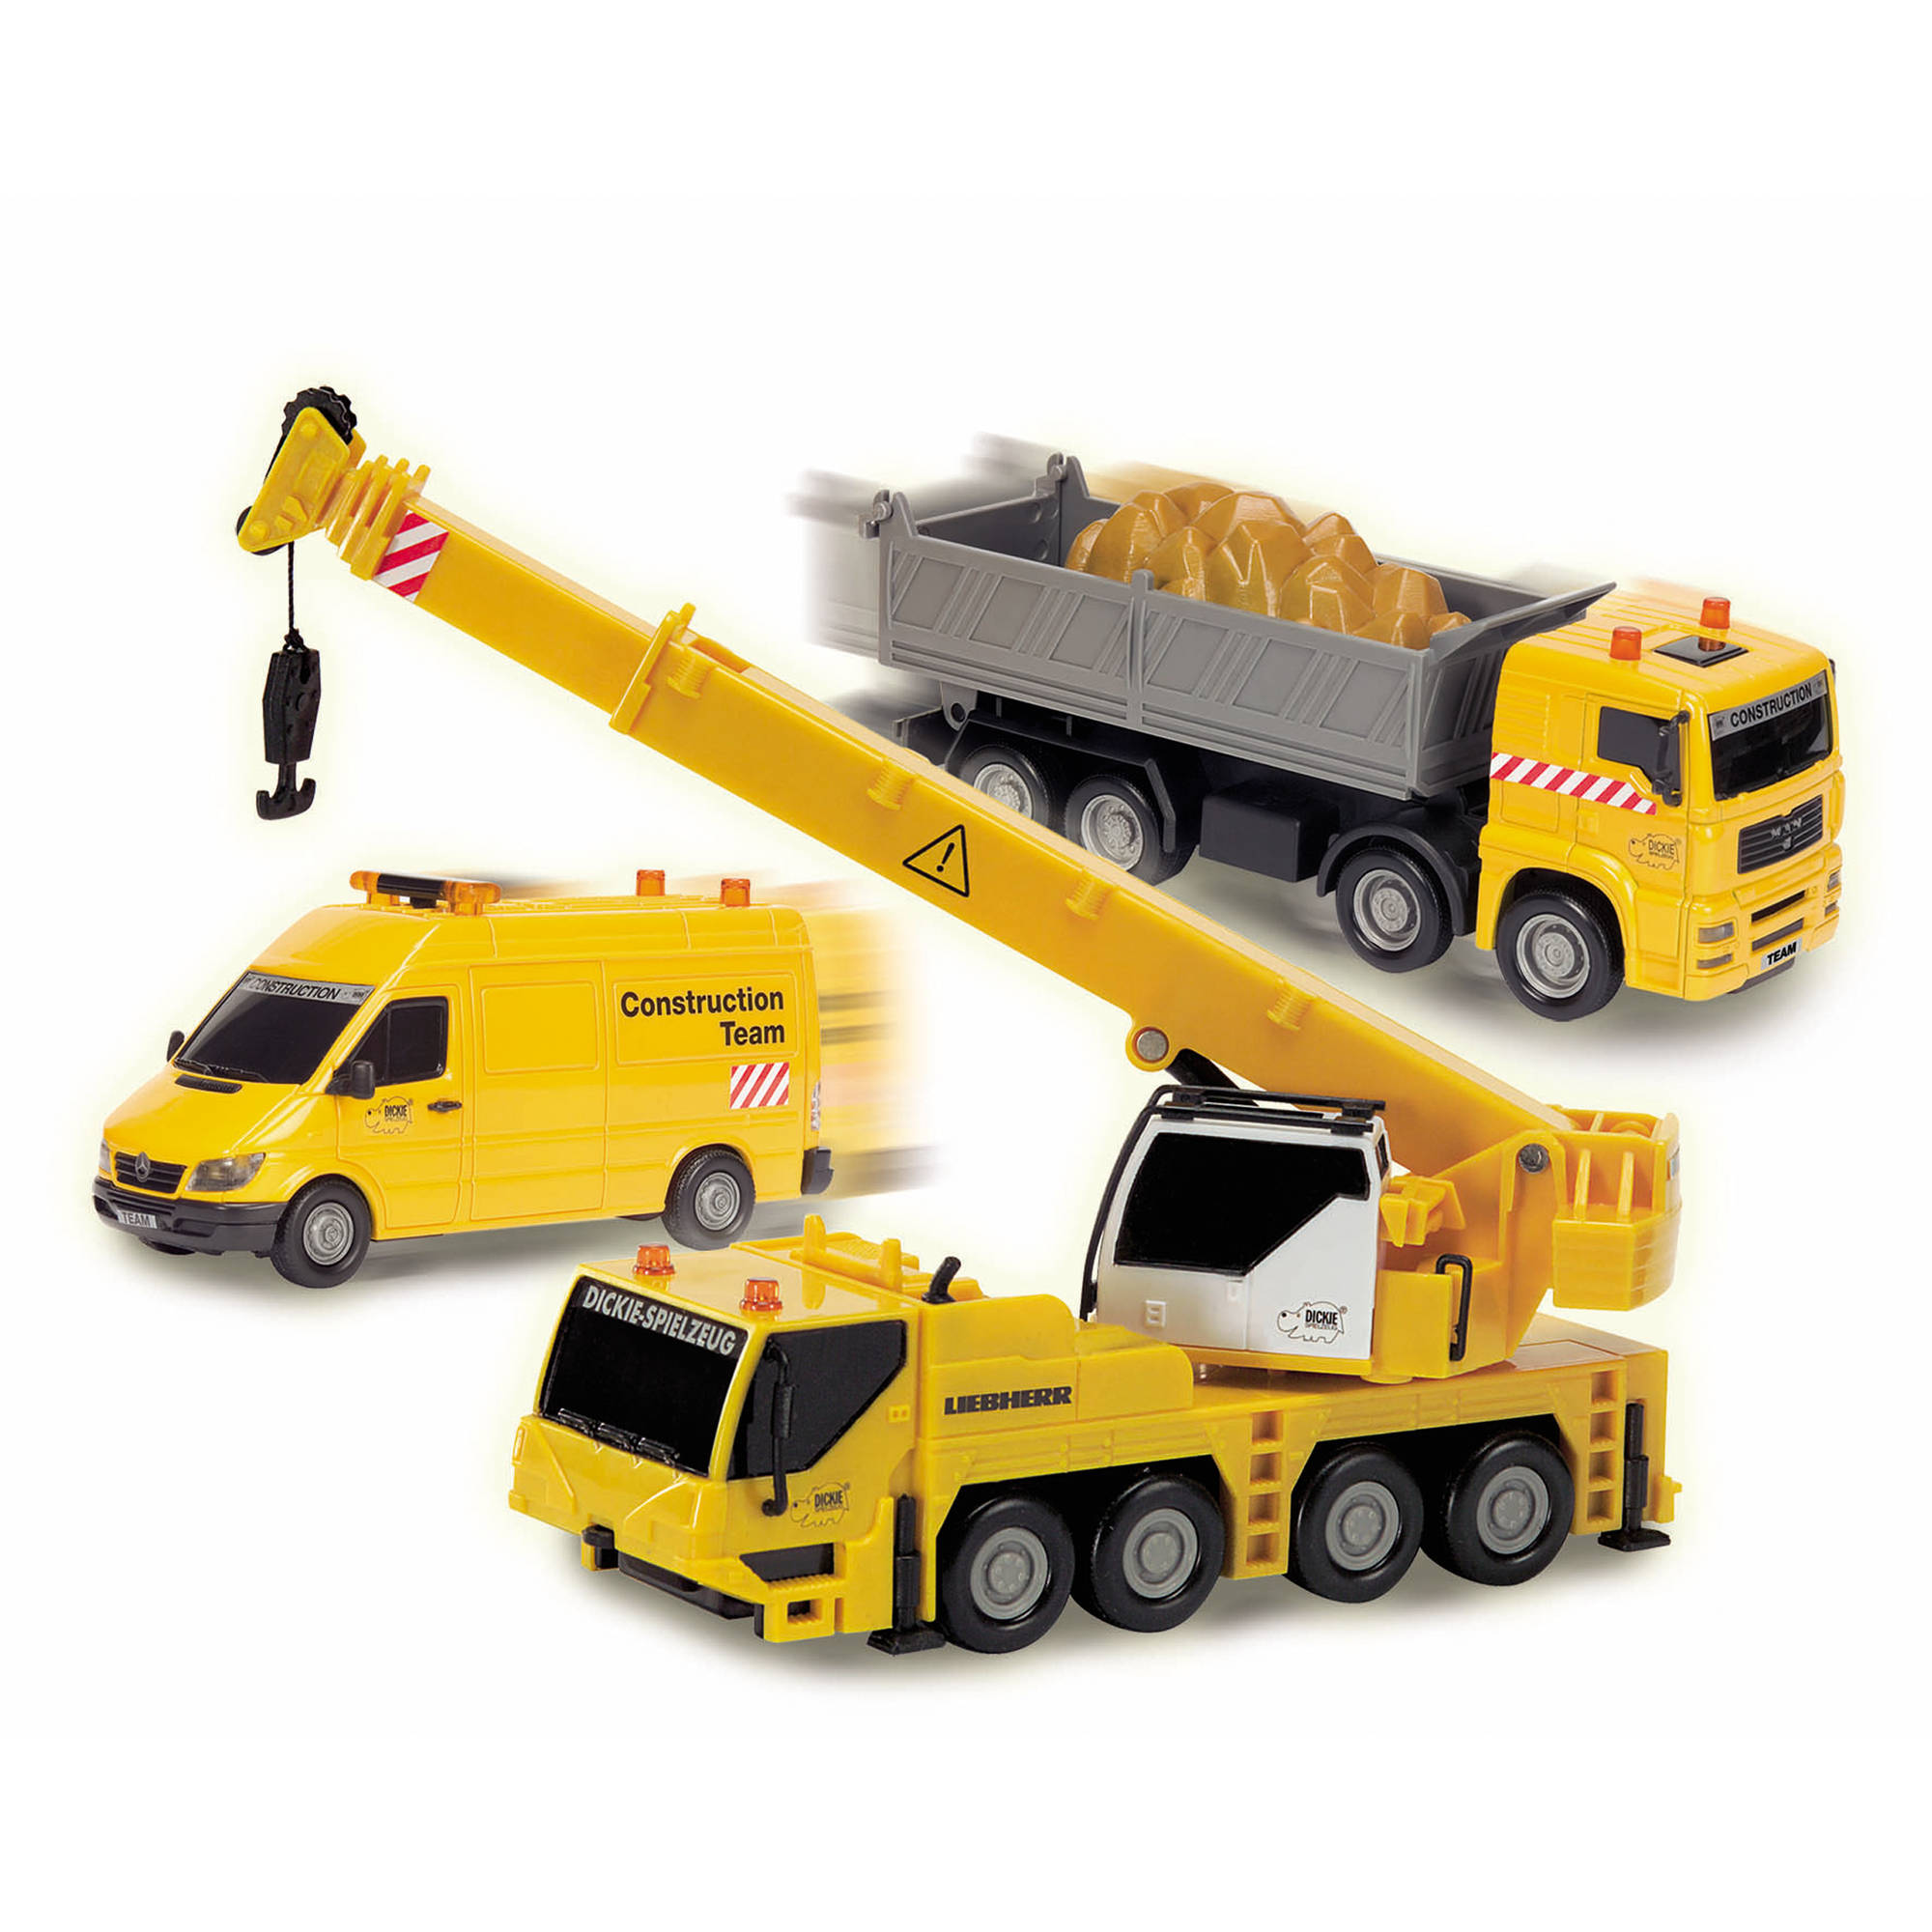 Dickie Toys Construction Team, Crane Truck - Walmart.com